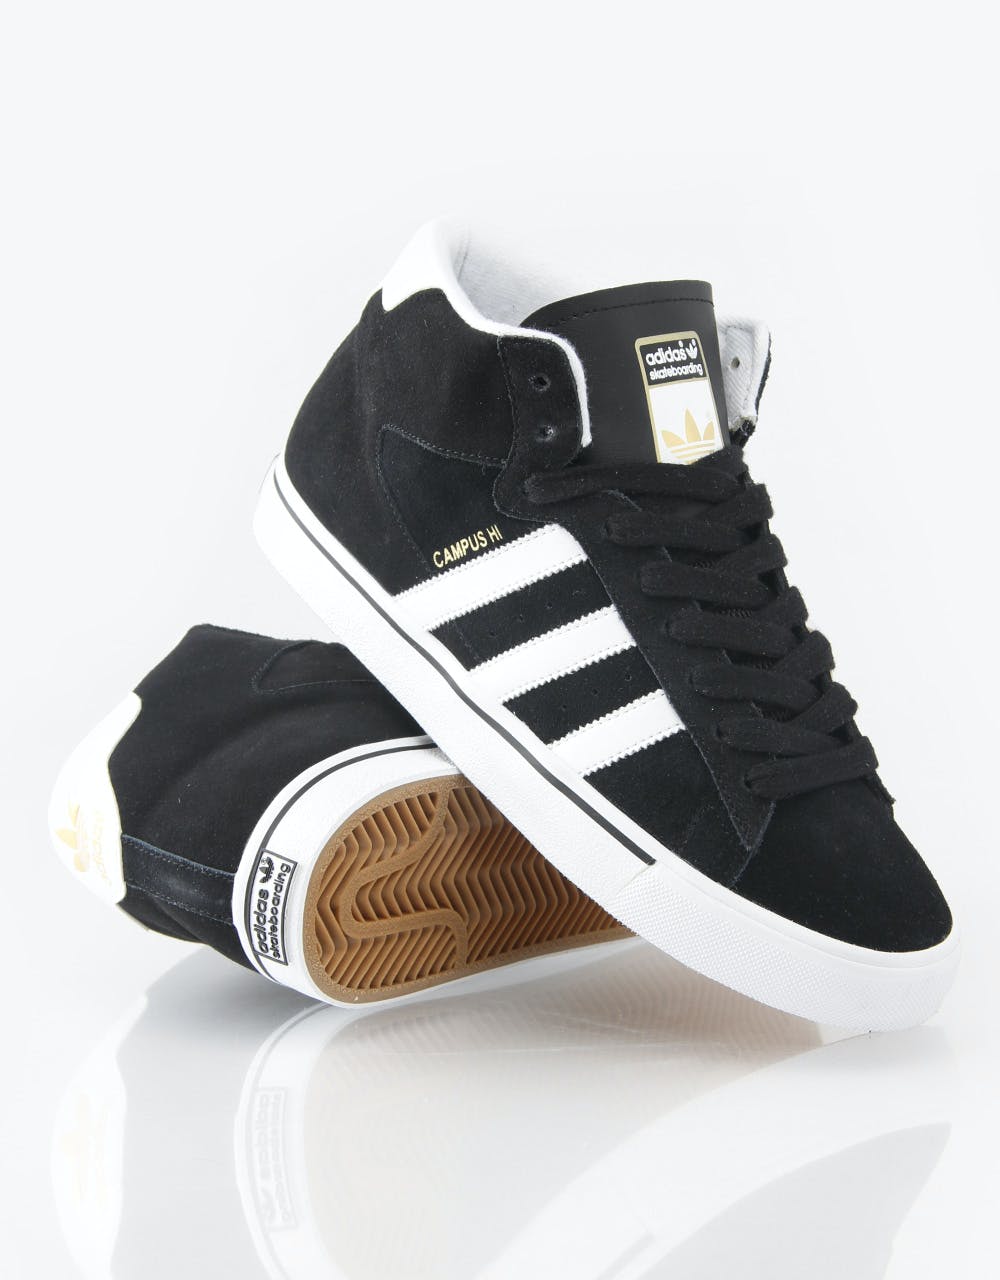 Adidas Campus Vulc Mid Skate Shoes - Black/White/Gold